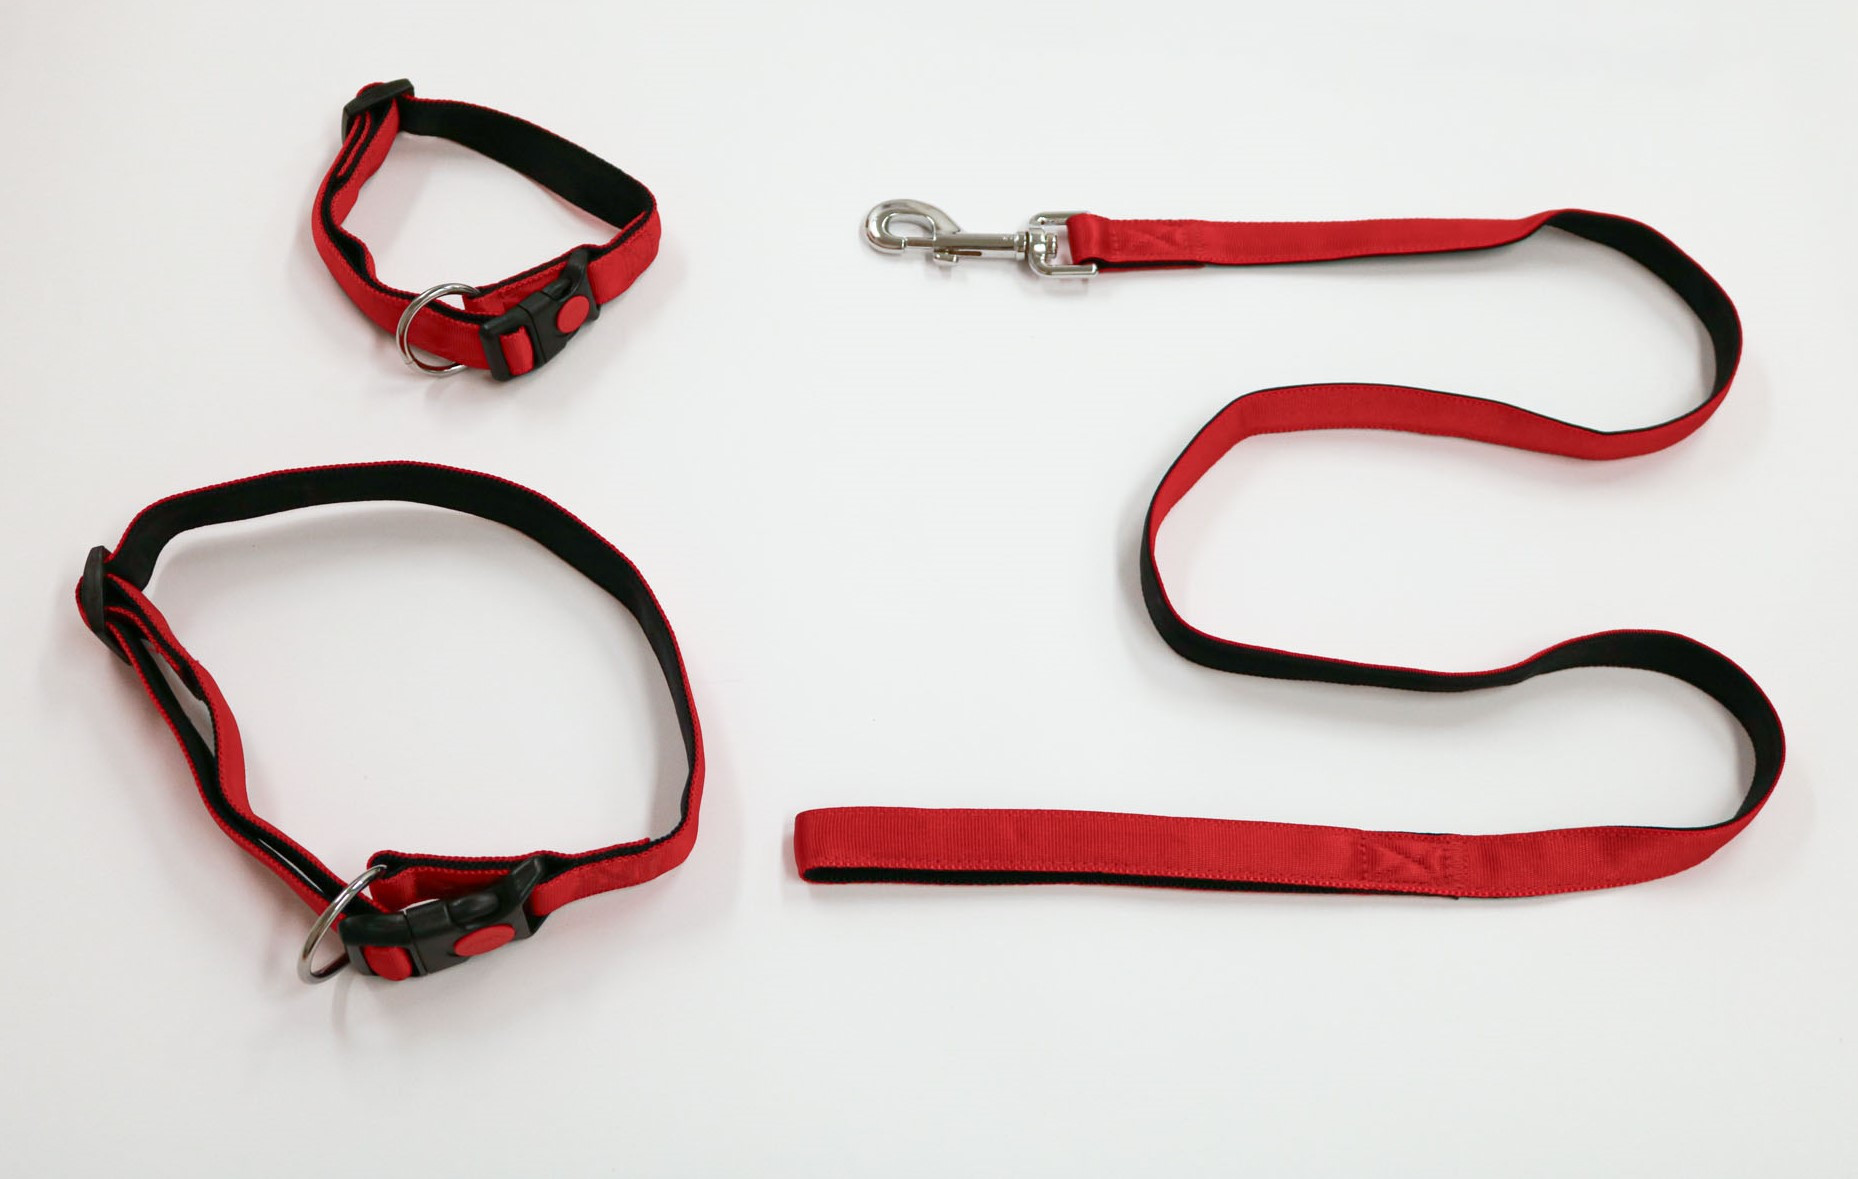 Nylon halsband of looplijn gevoerd rood